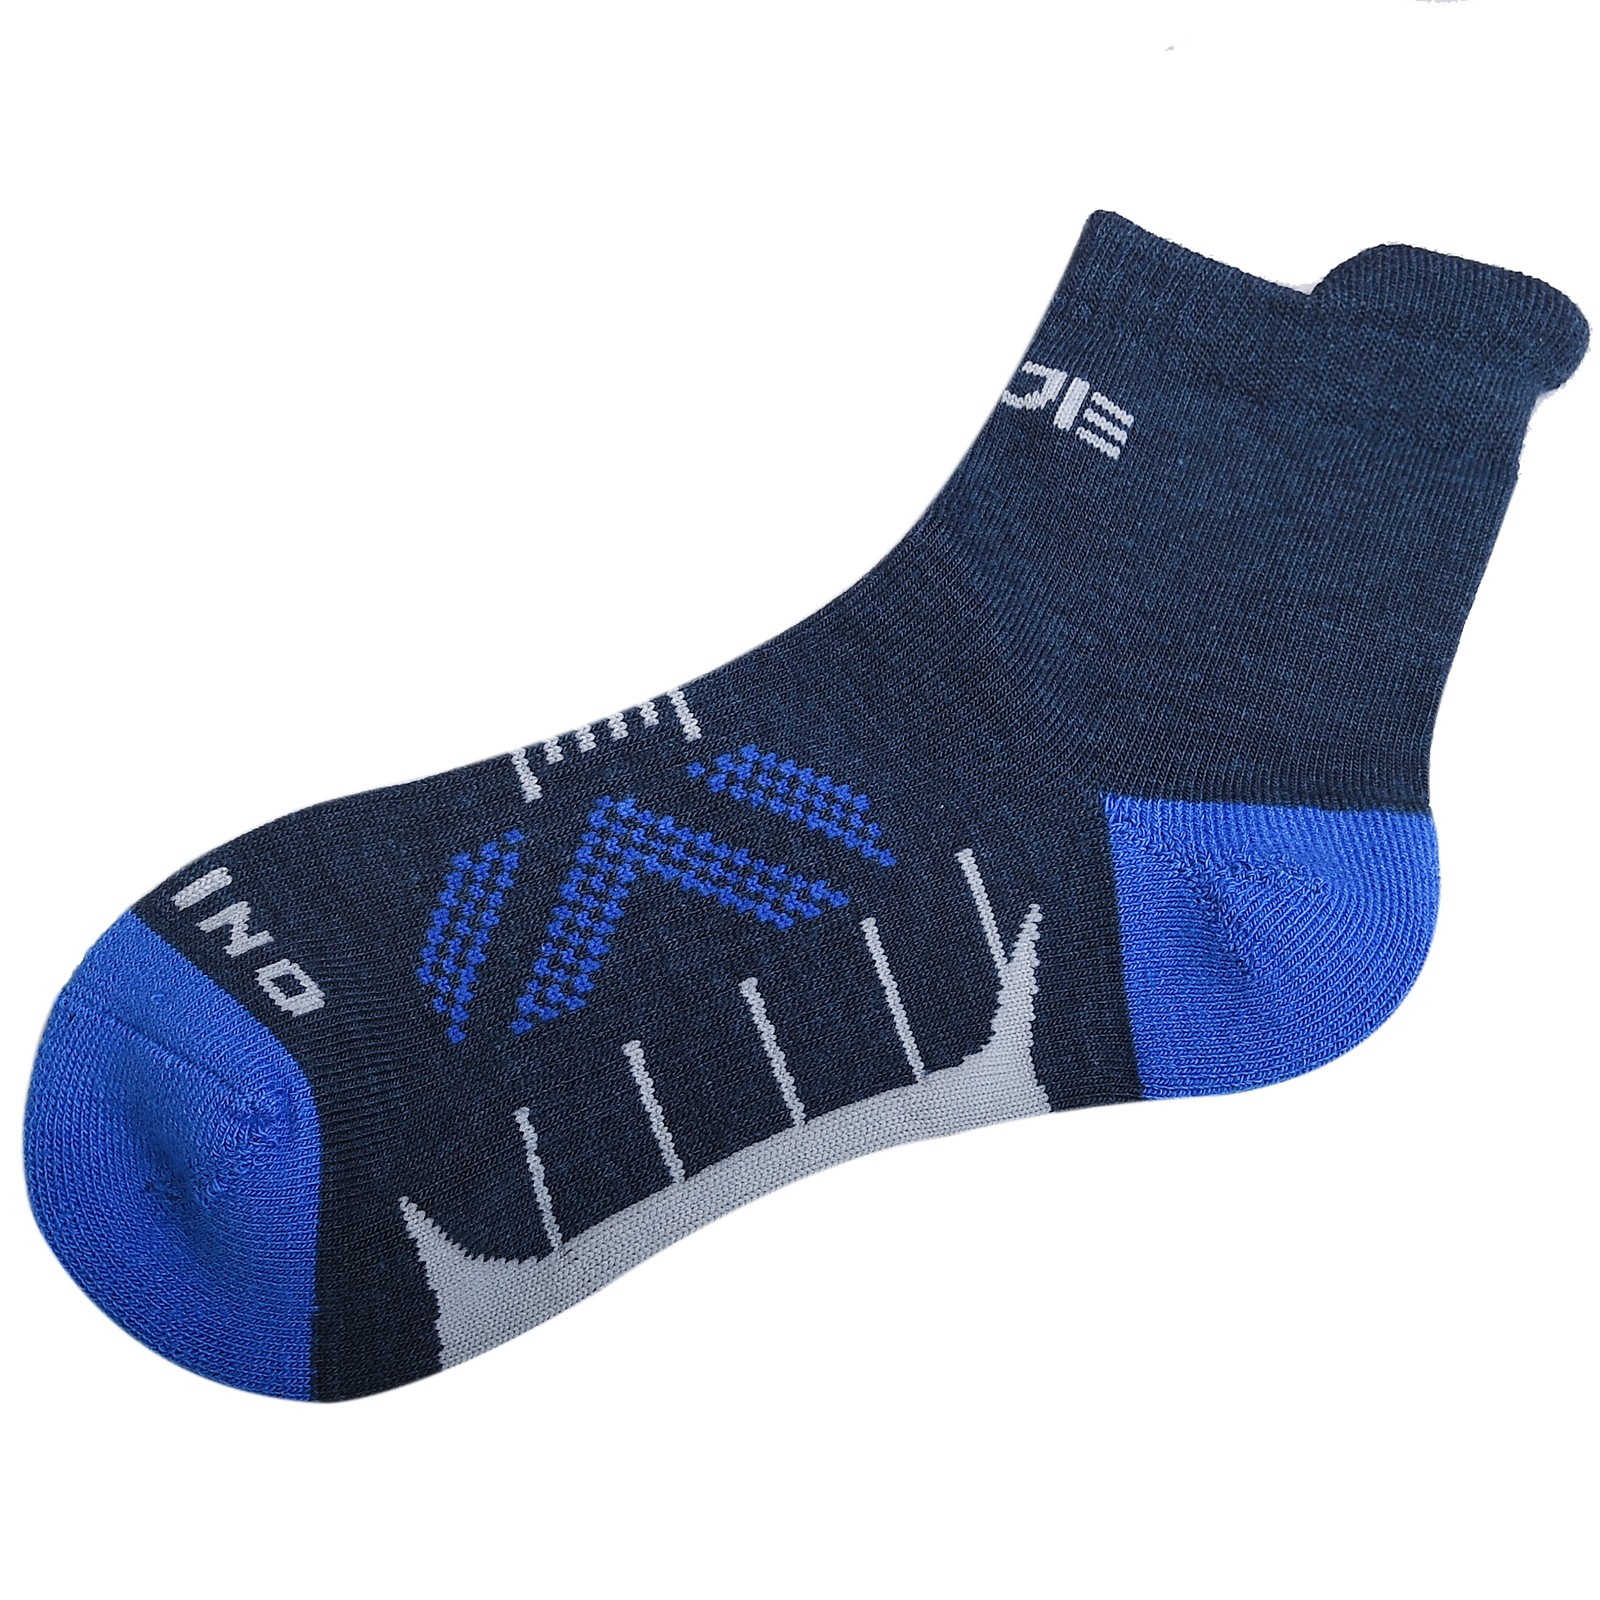 AONIJIE E4828 Unisex Winter Wool Socks Running Warm Sports Woollen Terry Socks for Outdoor Running Camping Climbing Marathon